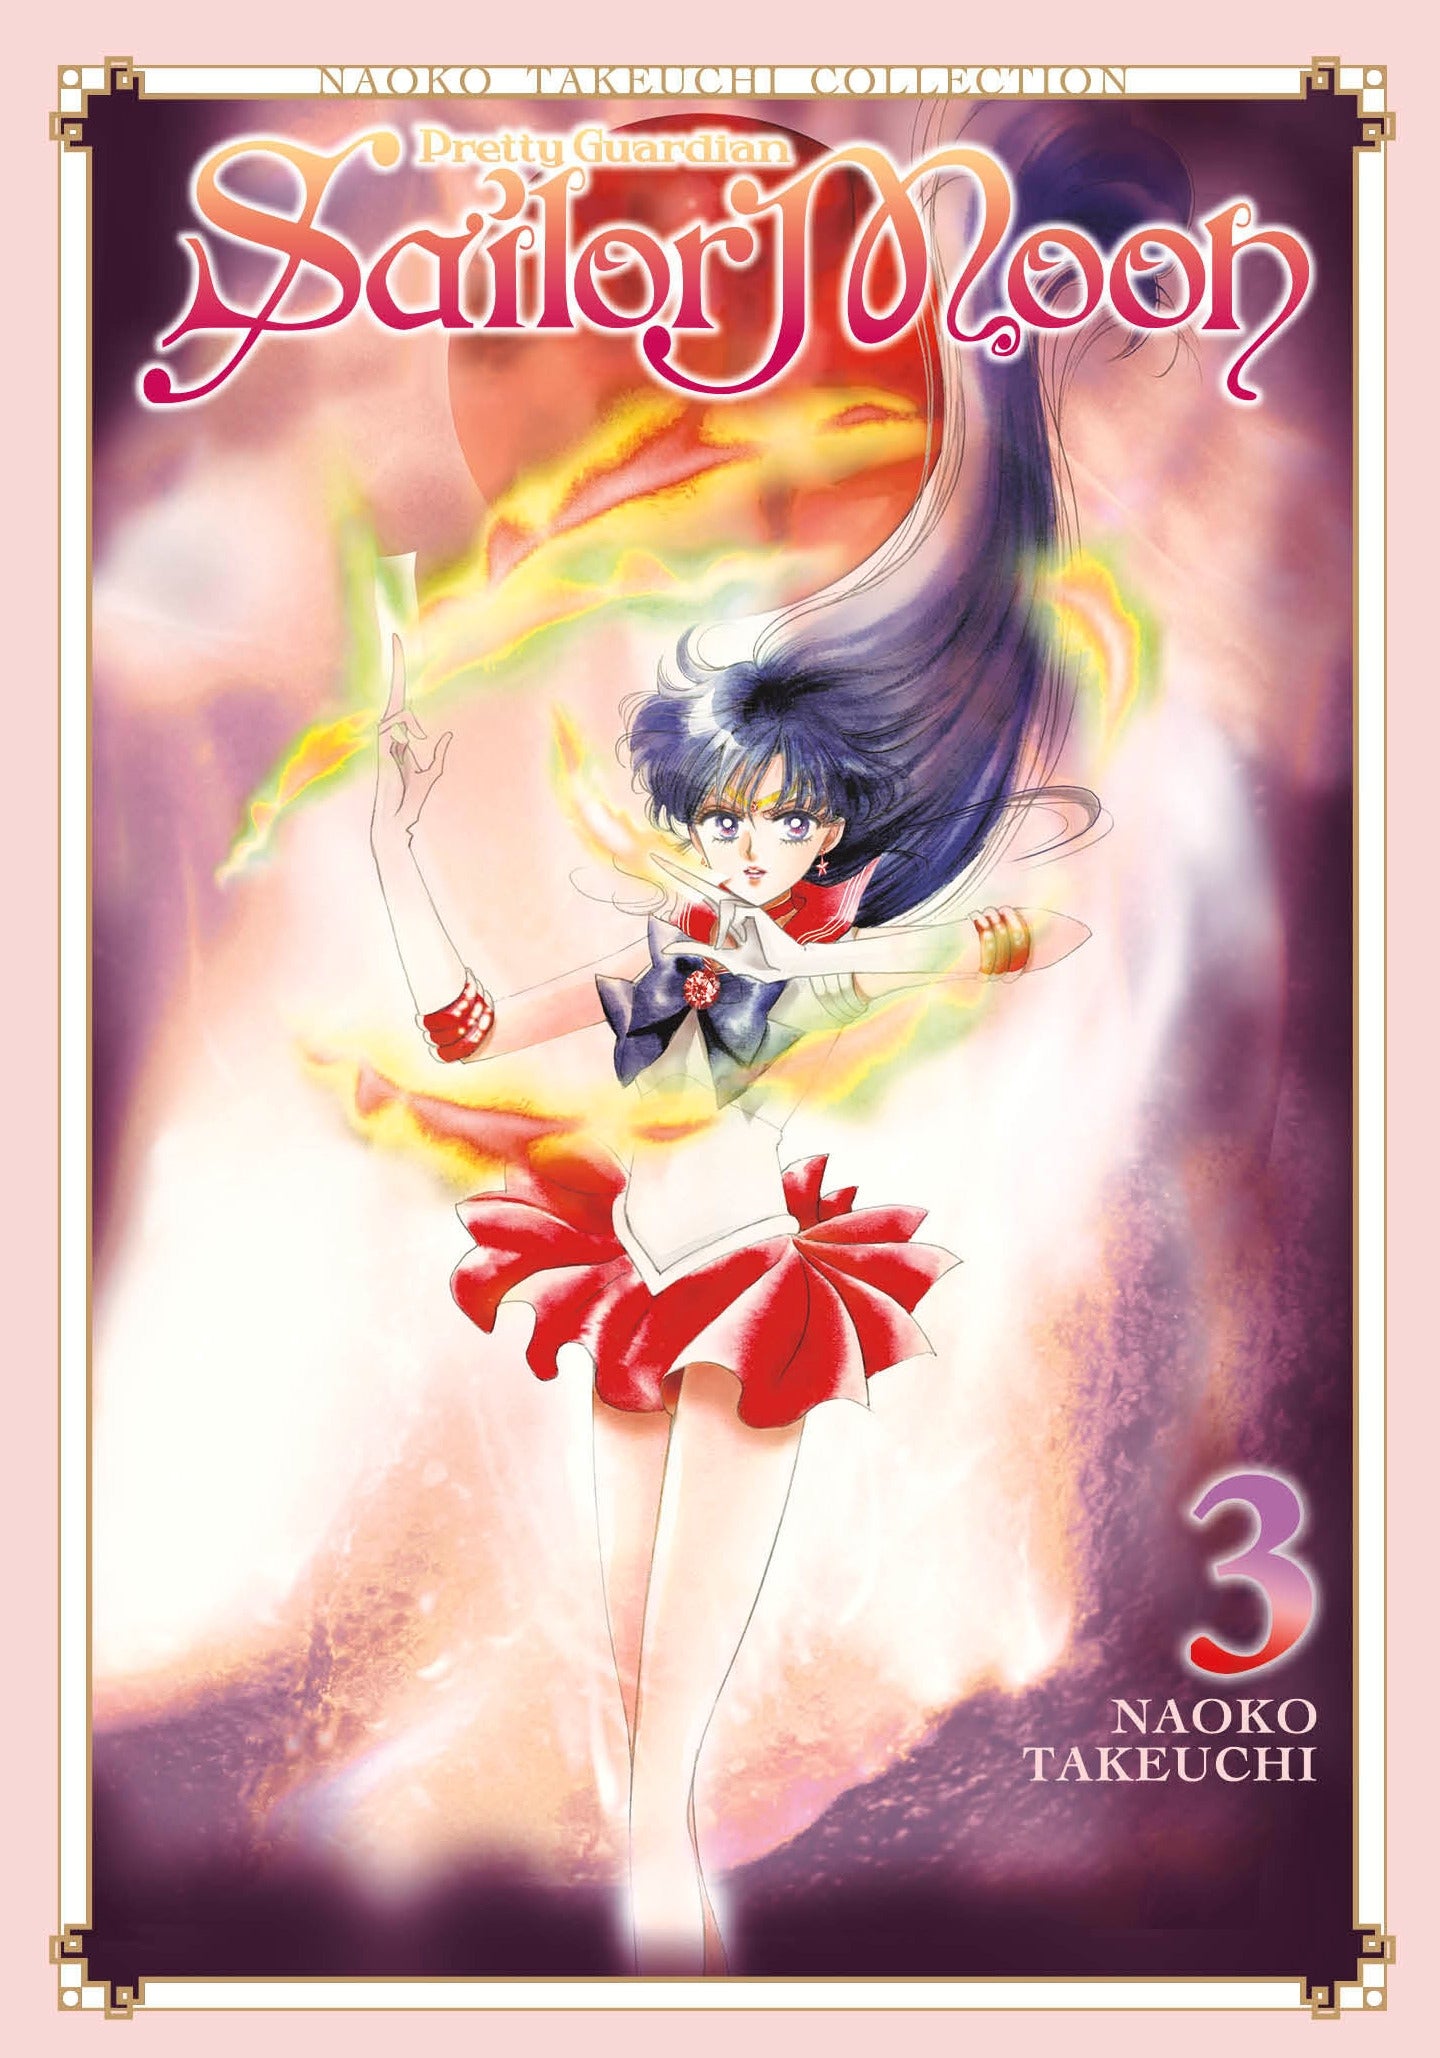 Sailor Moon, Vol. 3 [Naoko Takeuchi Collection]